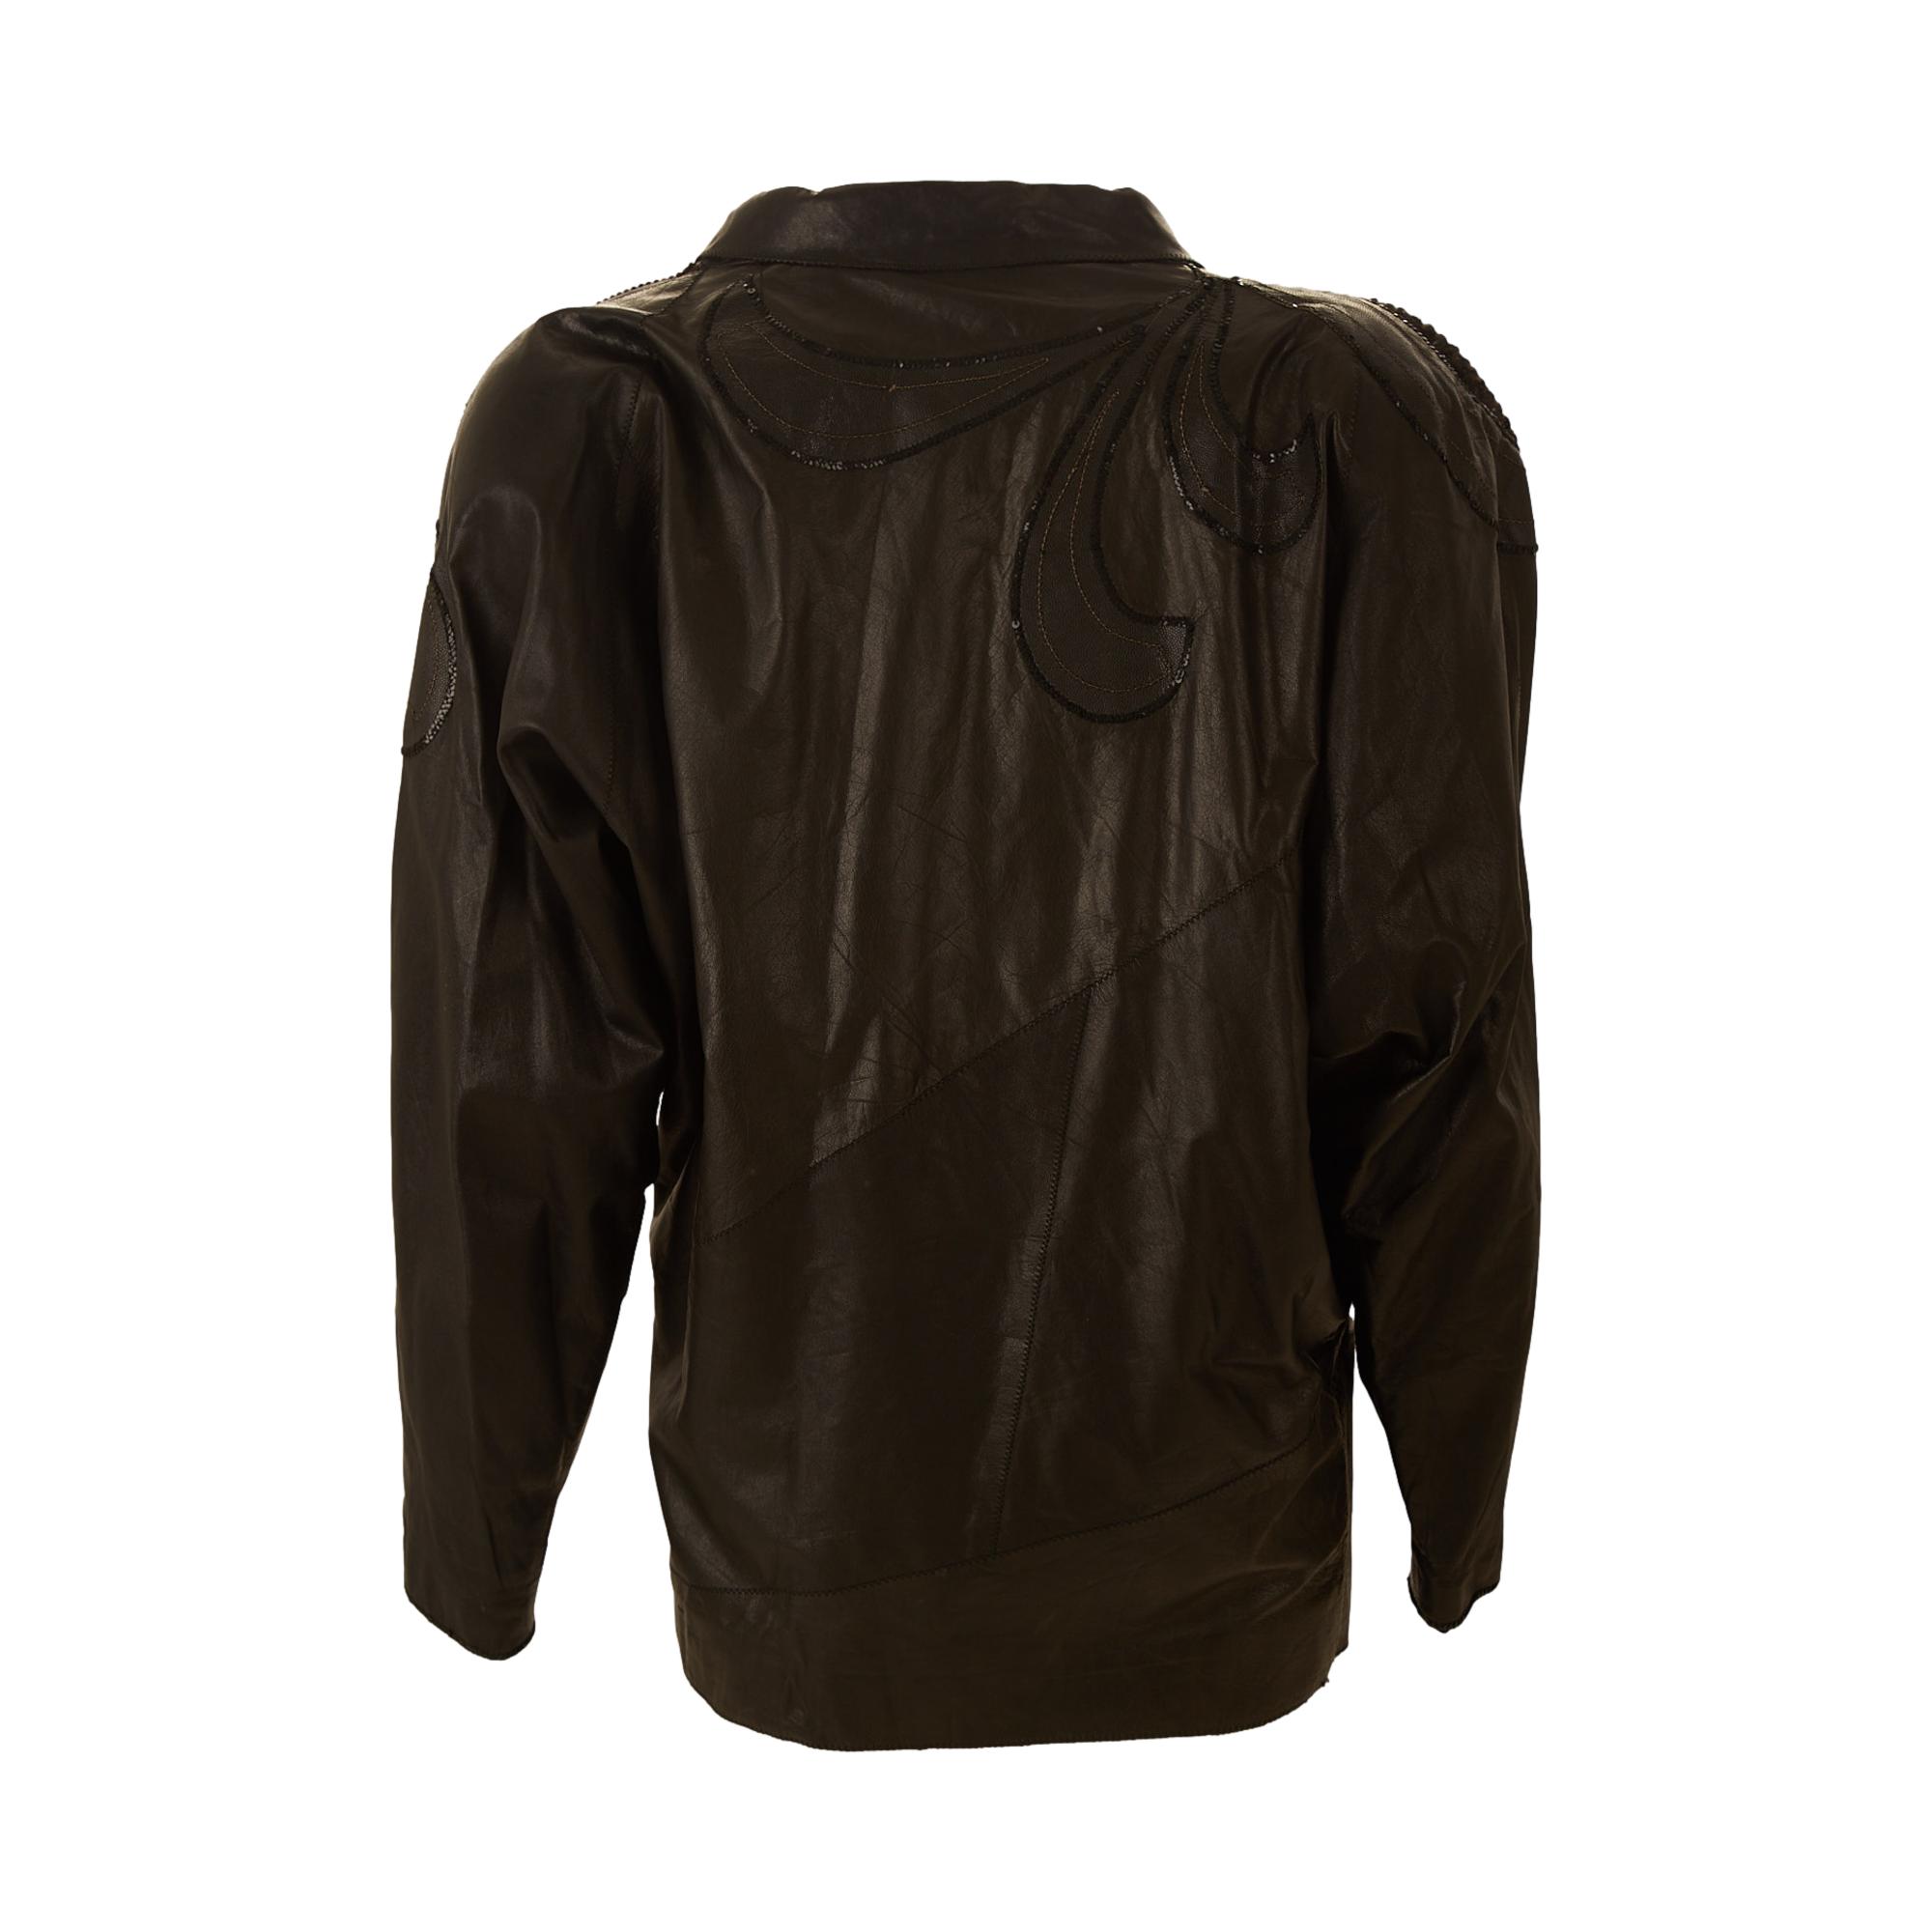 Roberto Cavalli Black Sequin Leather Jacket